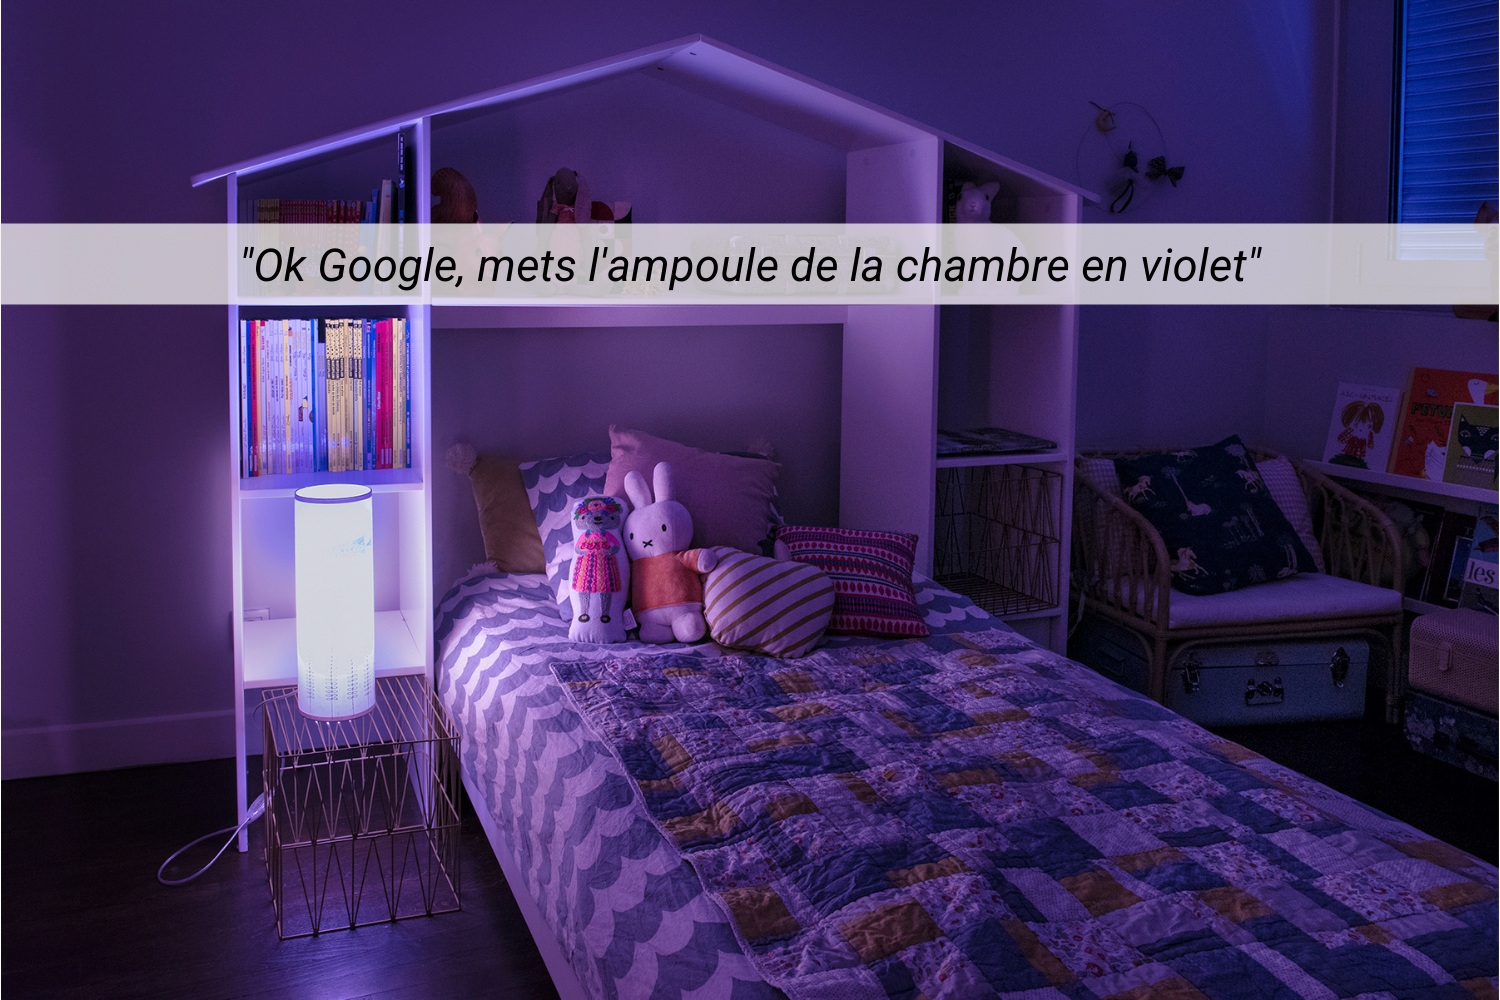 Ok Google, allume la lampe de la chambre en violet